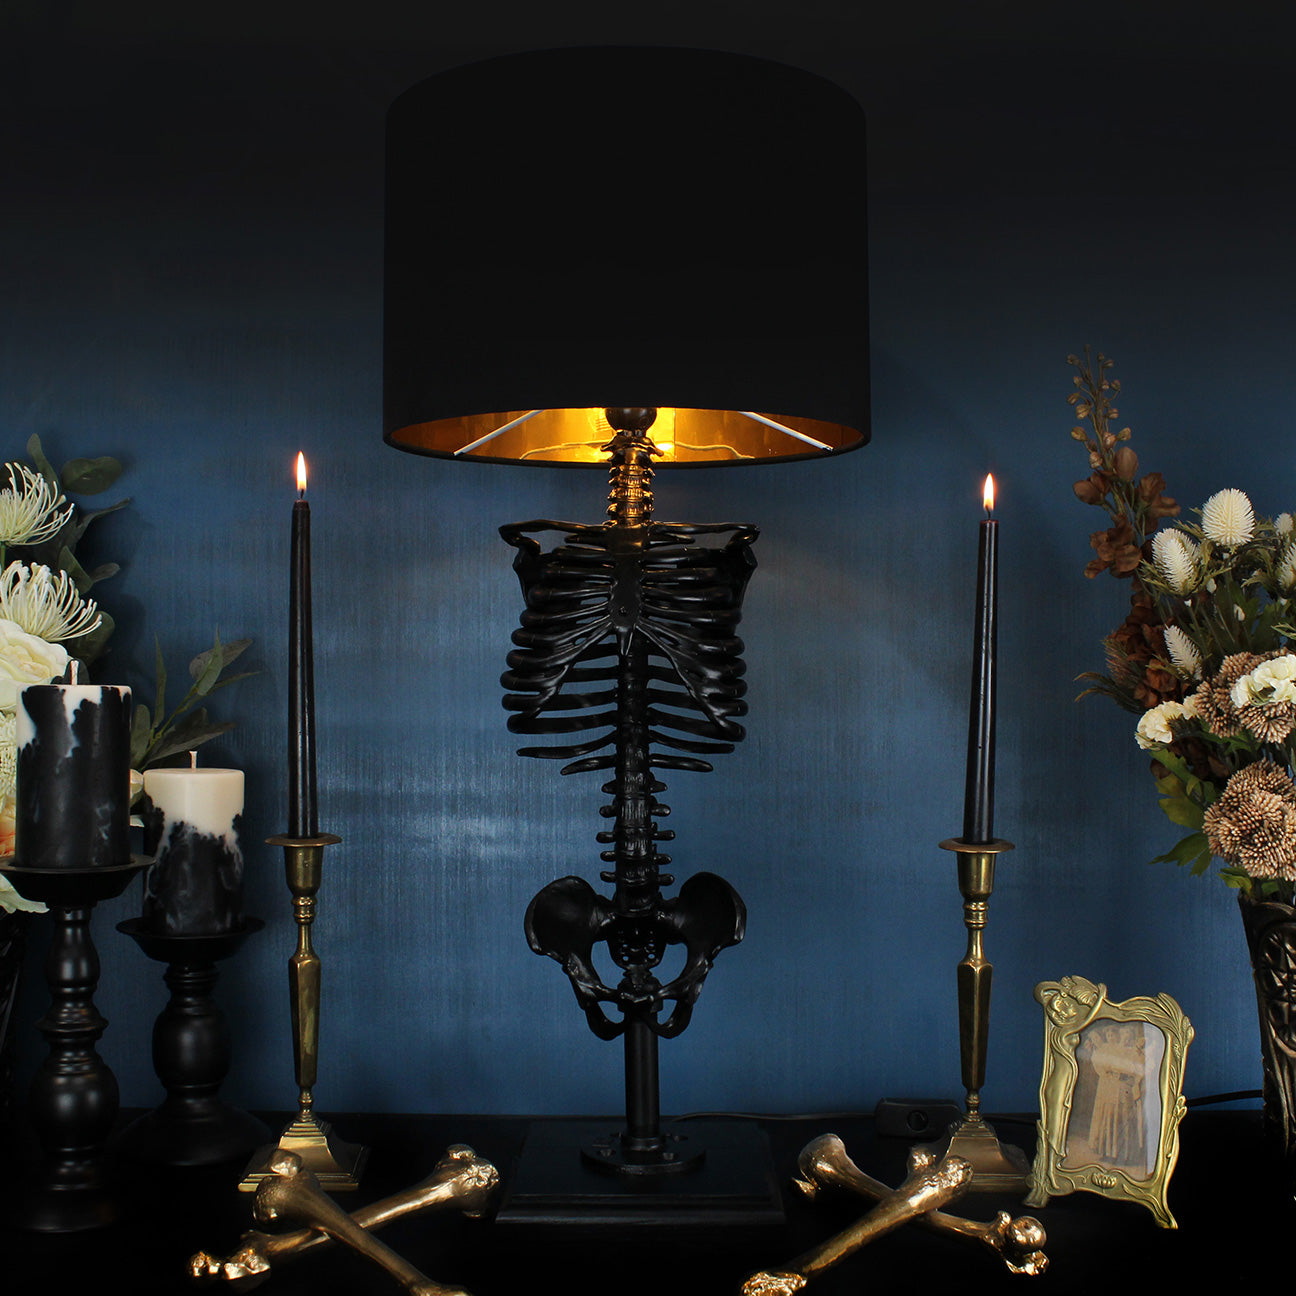 The Skeleton Lamp by The Blackened Teeth